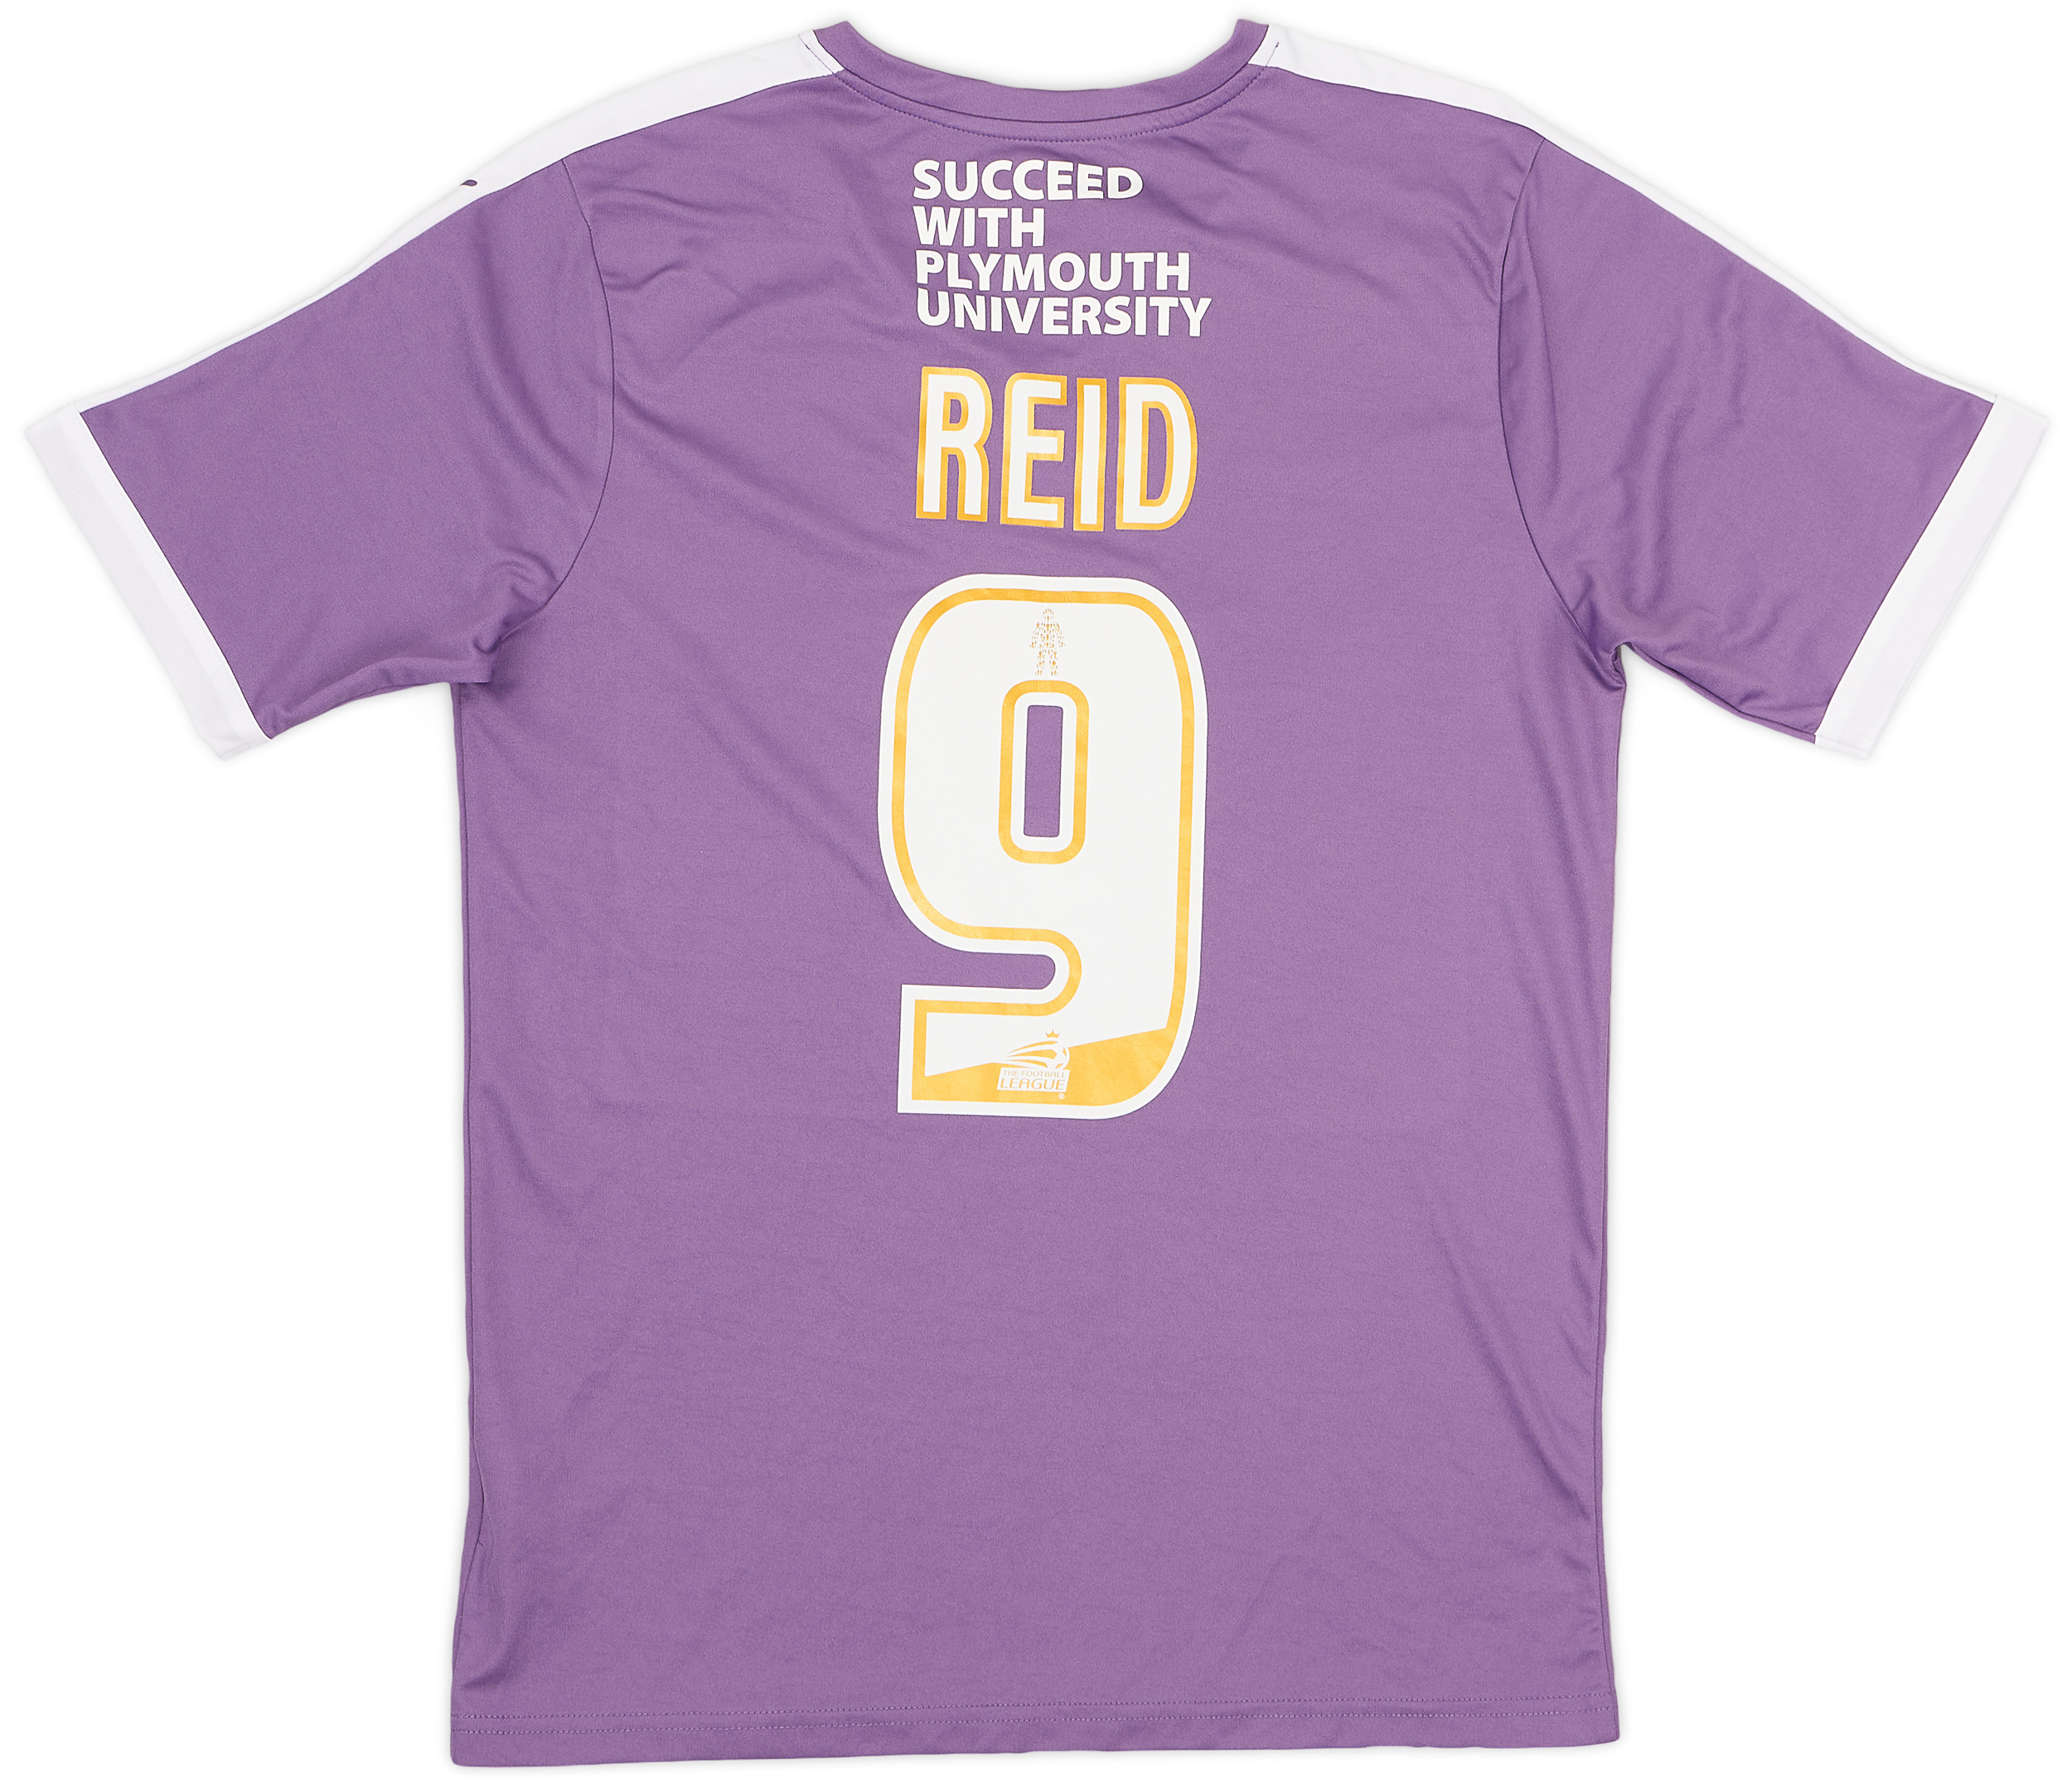 2015-16 Plymouth Away Shirt Reid #9 - 8/10 - ()